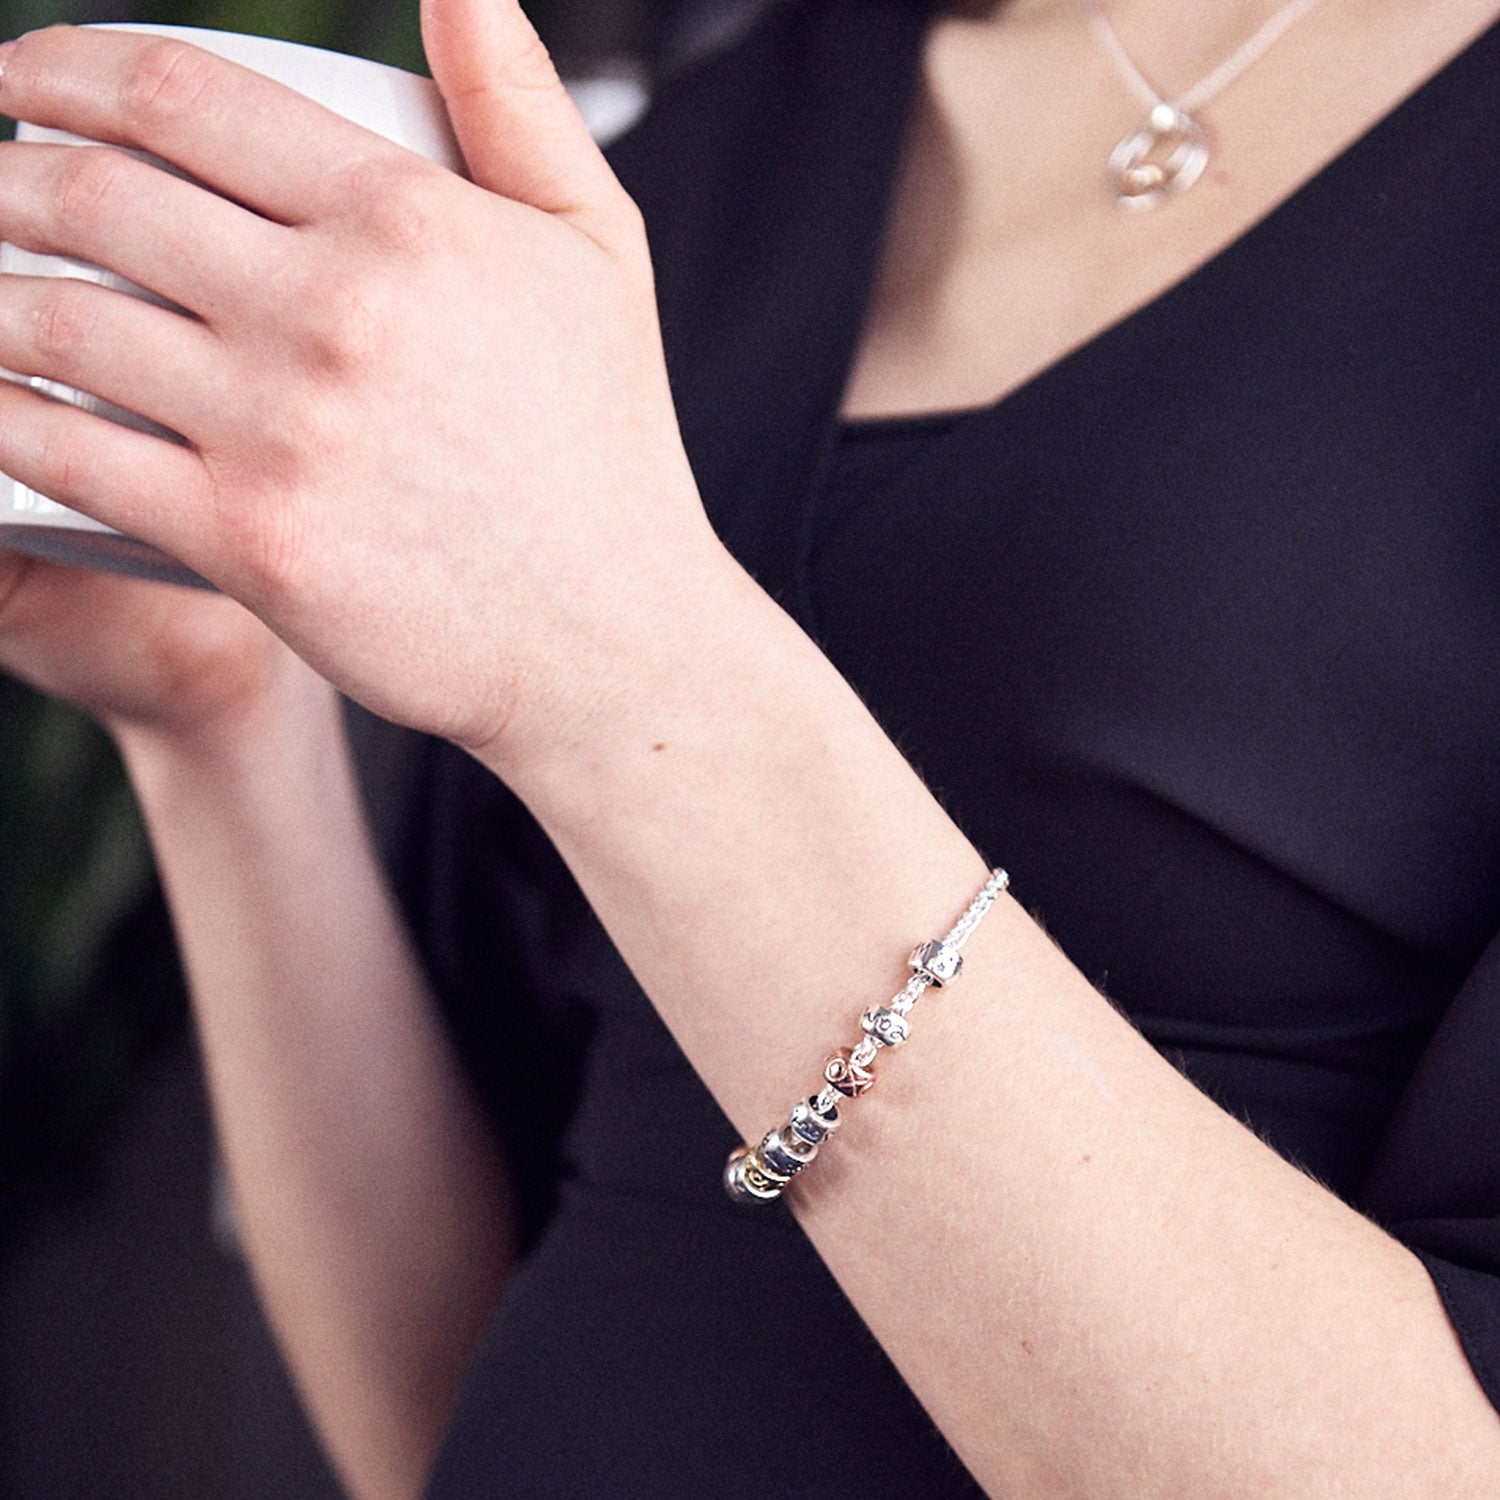 Never give up positive engraved silver charm for bracelets